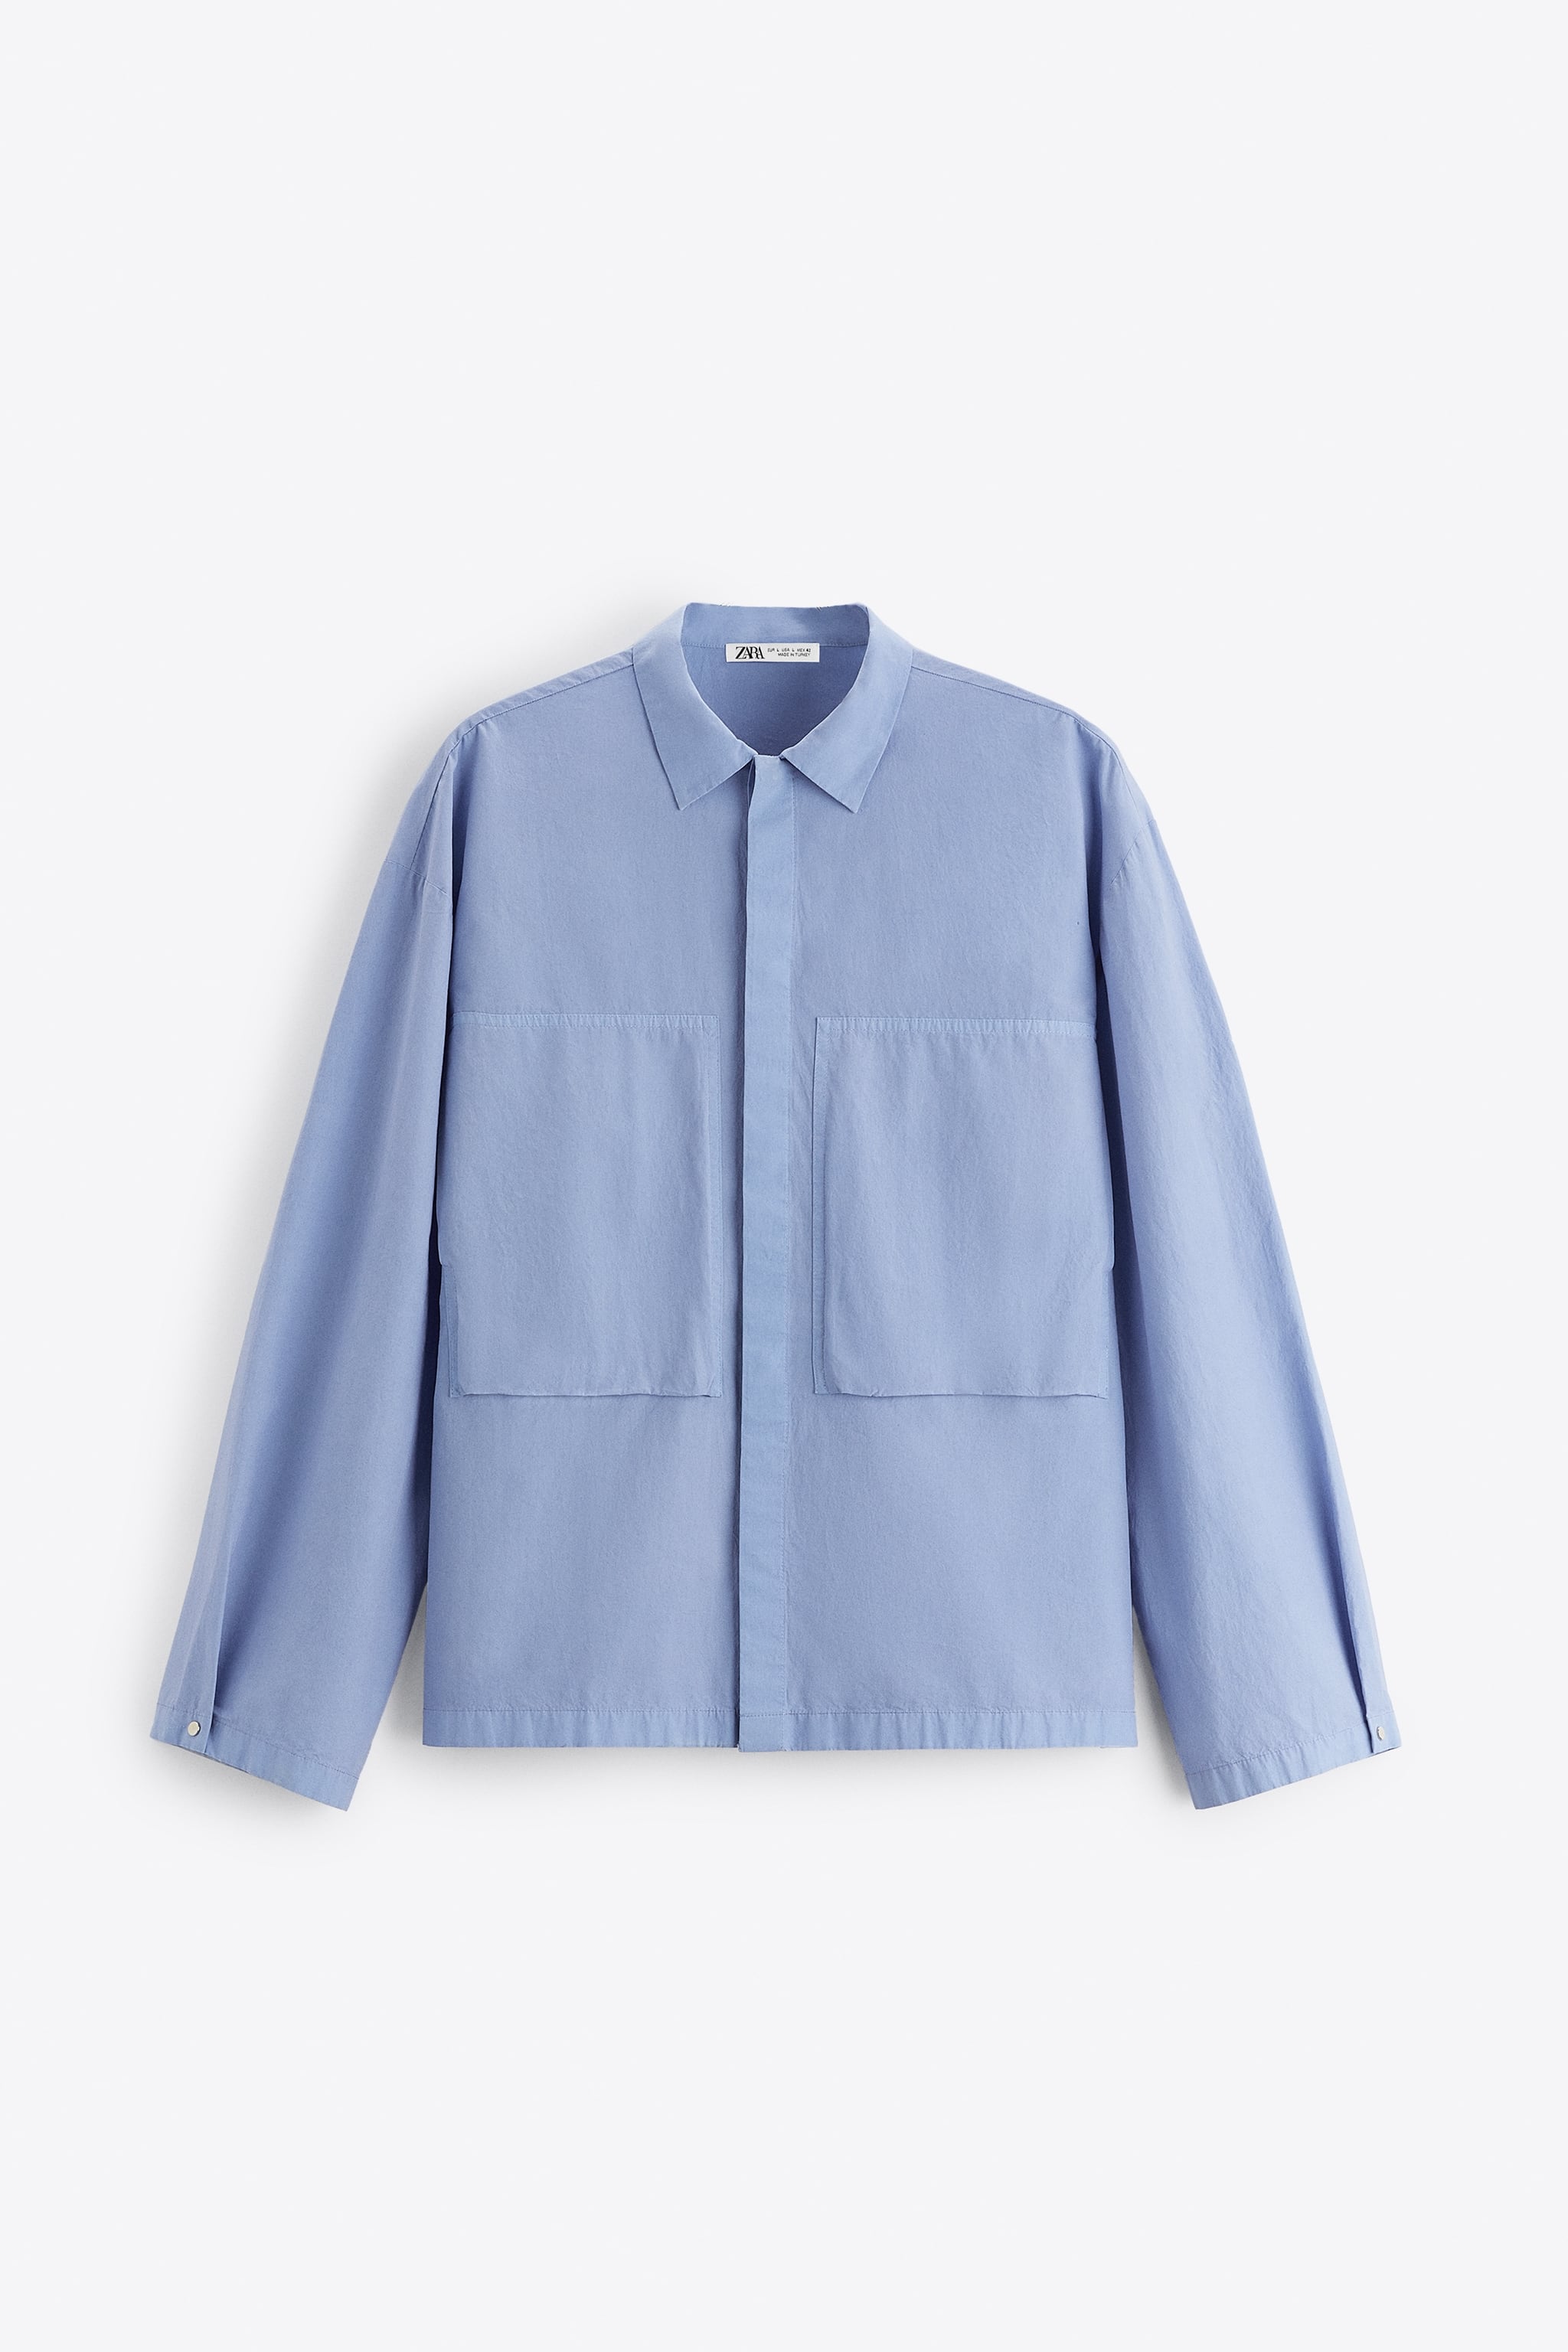 Рубашка мужская ZARA 02599410 синяя S (доставка из-за рубежа)